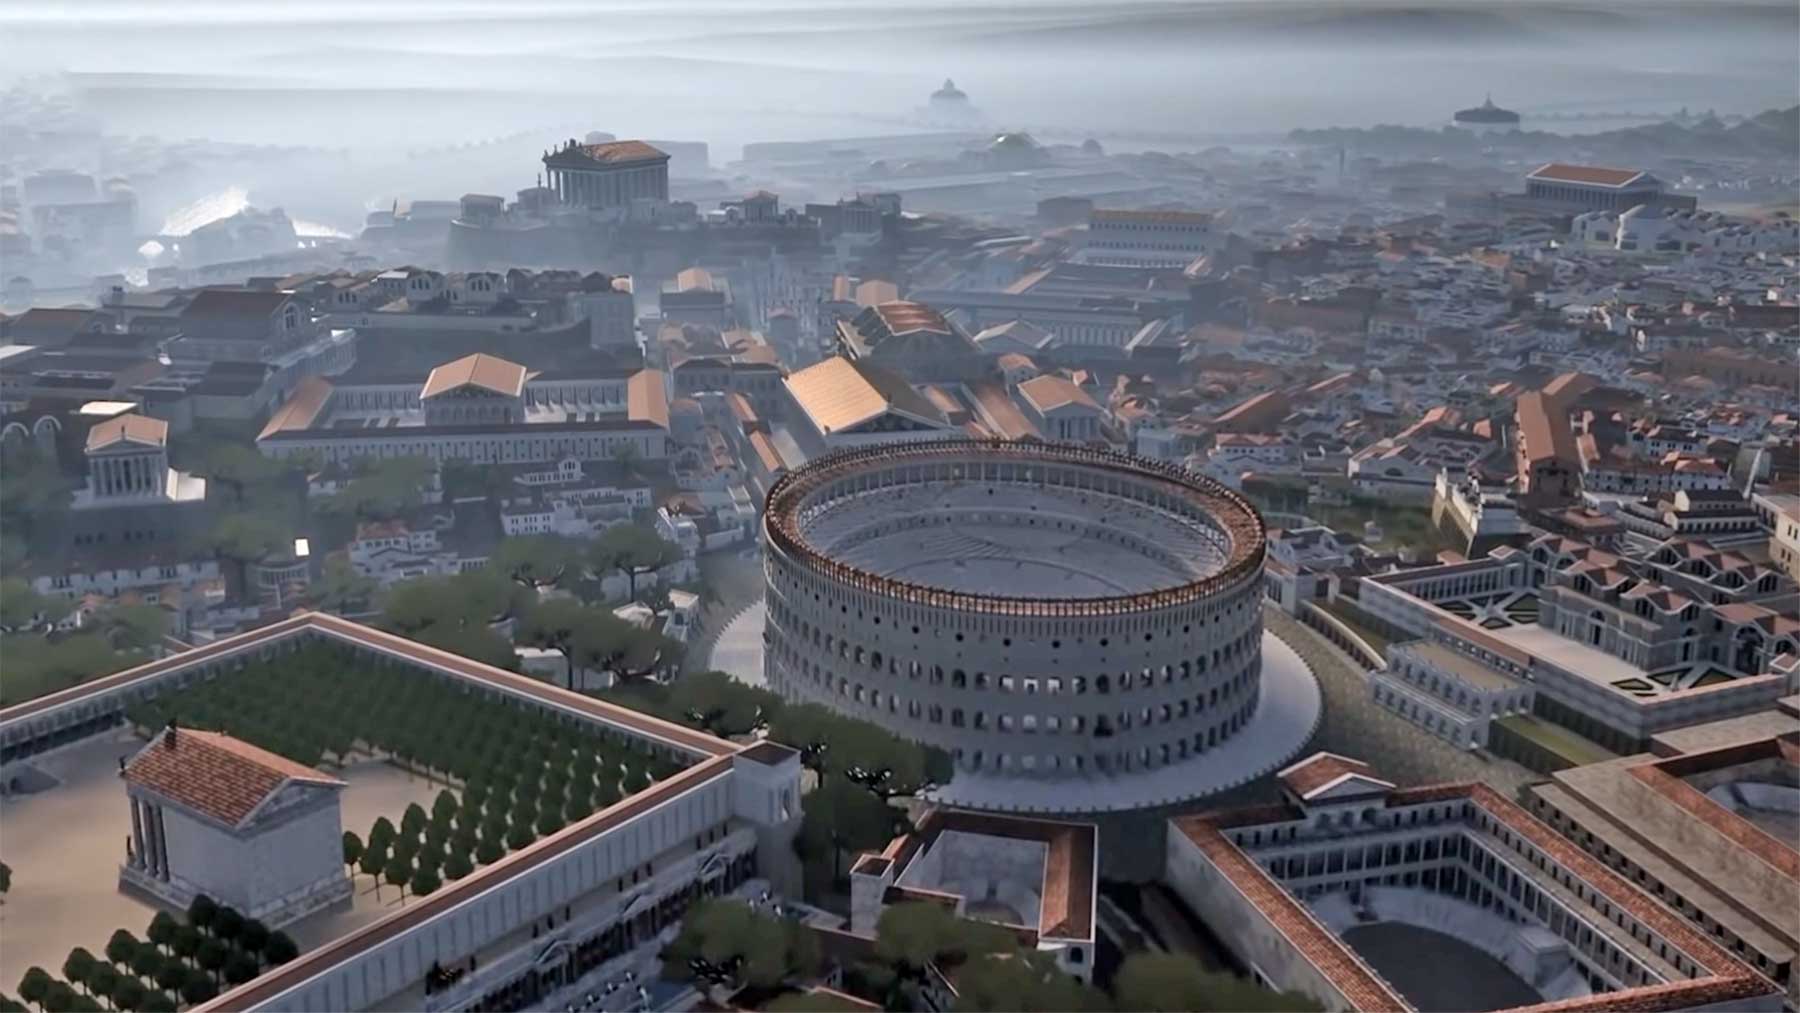 8-minütiger Flug über das antike Rom in 3D